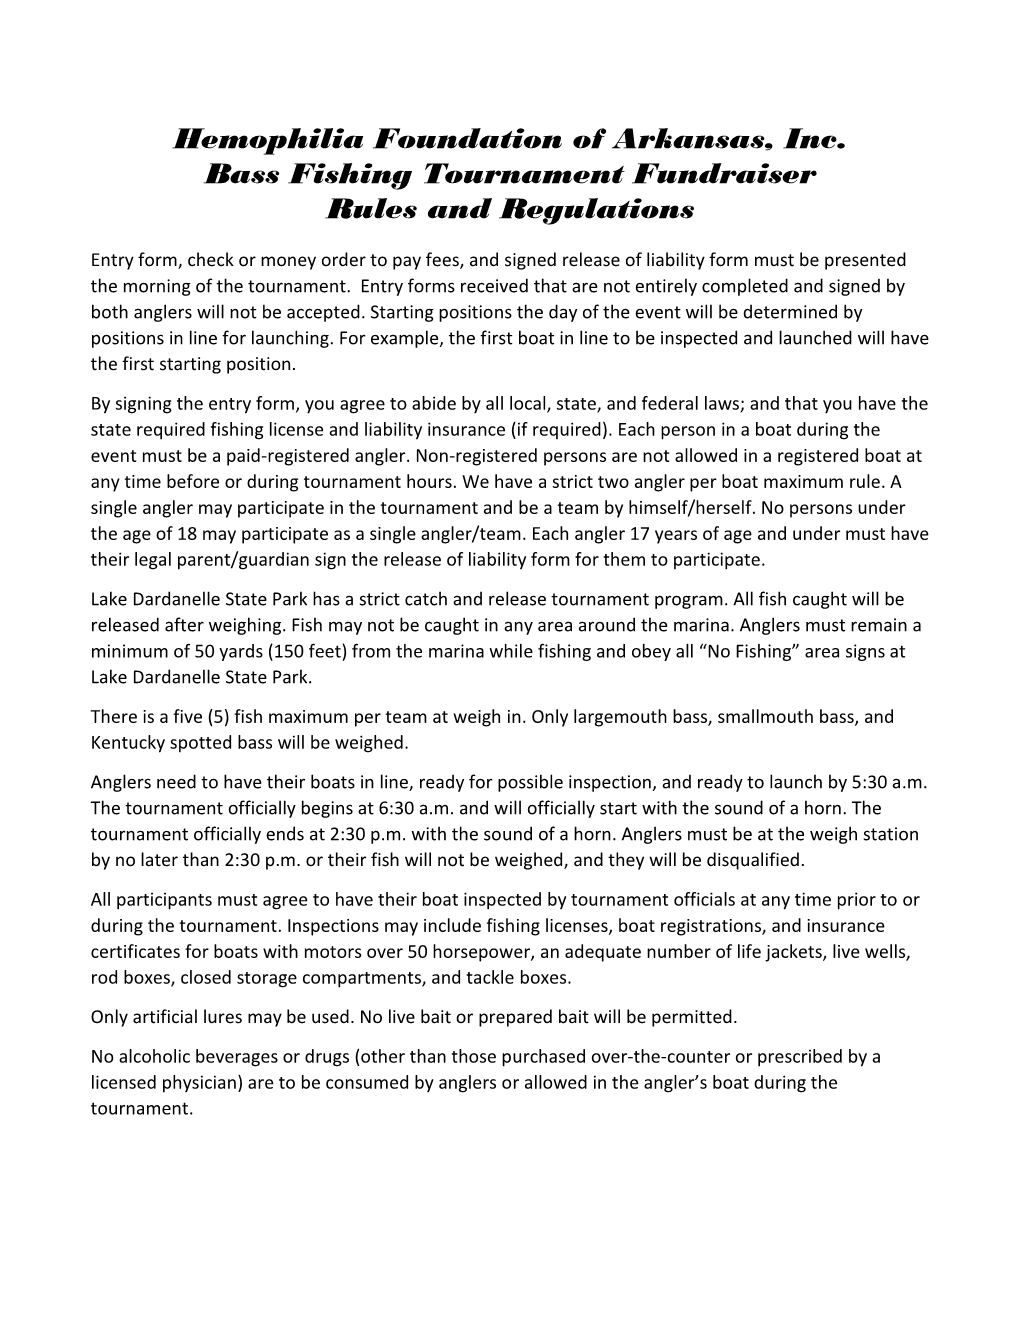 Hemophilia Foundation of Arkansas, Inc. Bass Fishing Tournament Fundraiser Rules and Regulations